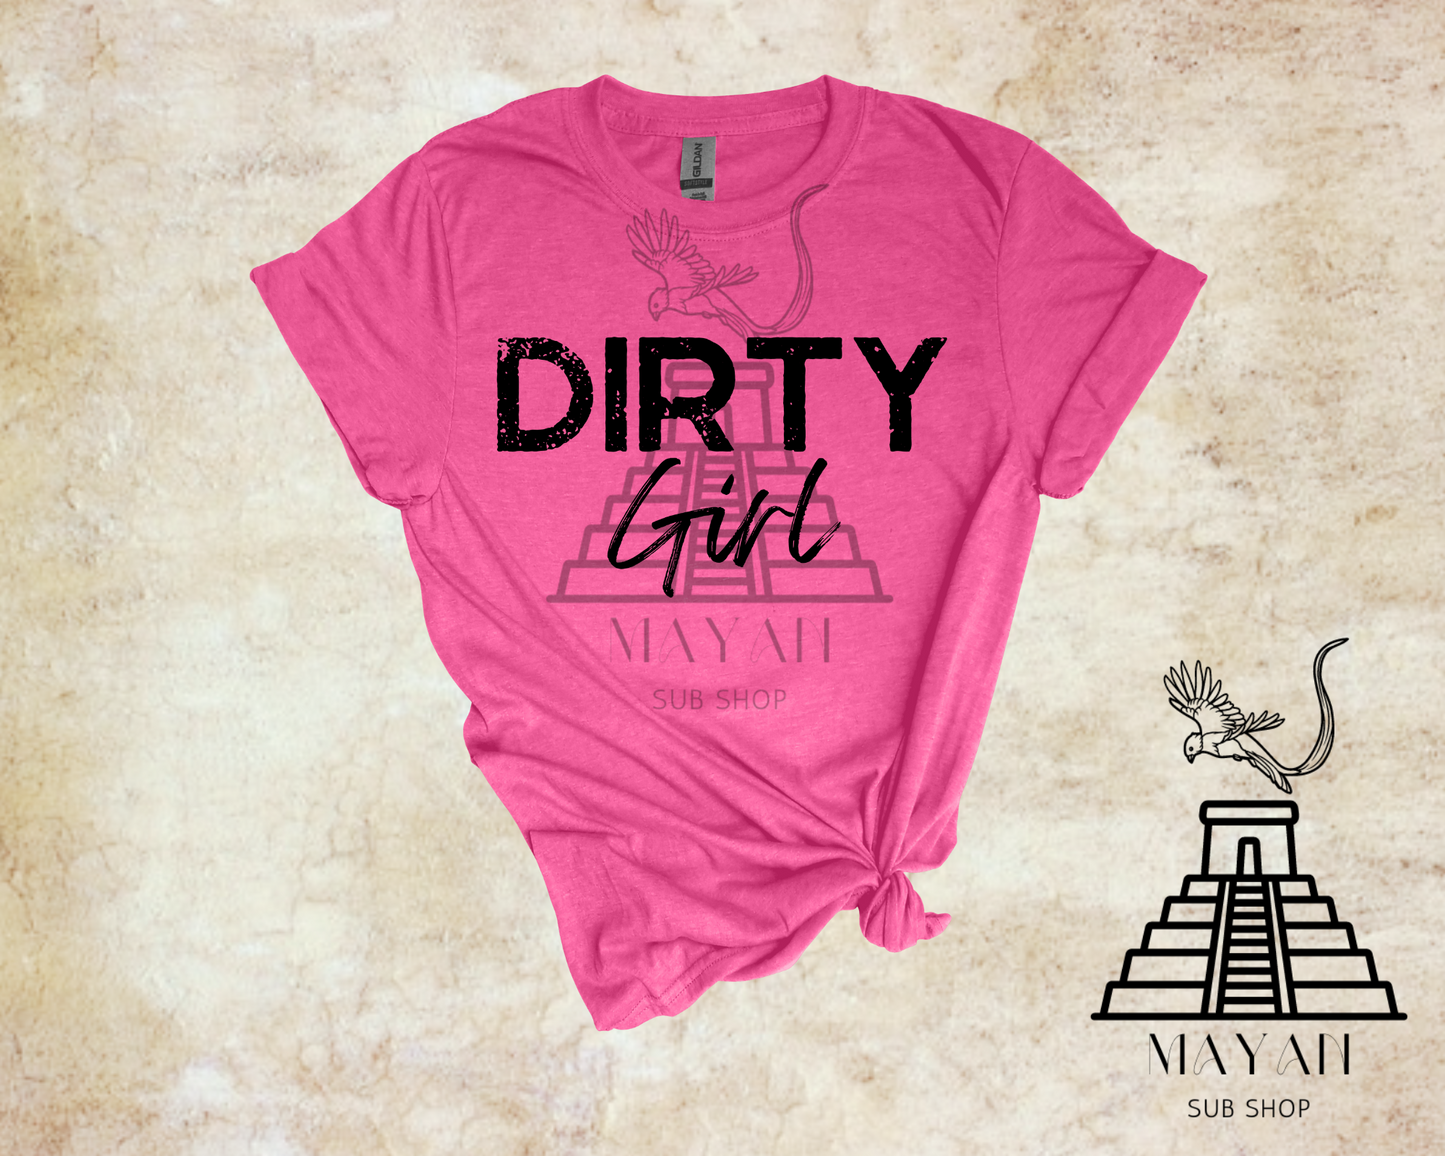 Dirty Girl shirt - Mayan Sub Shop